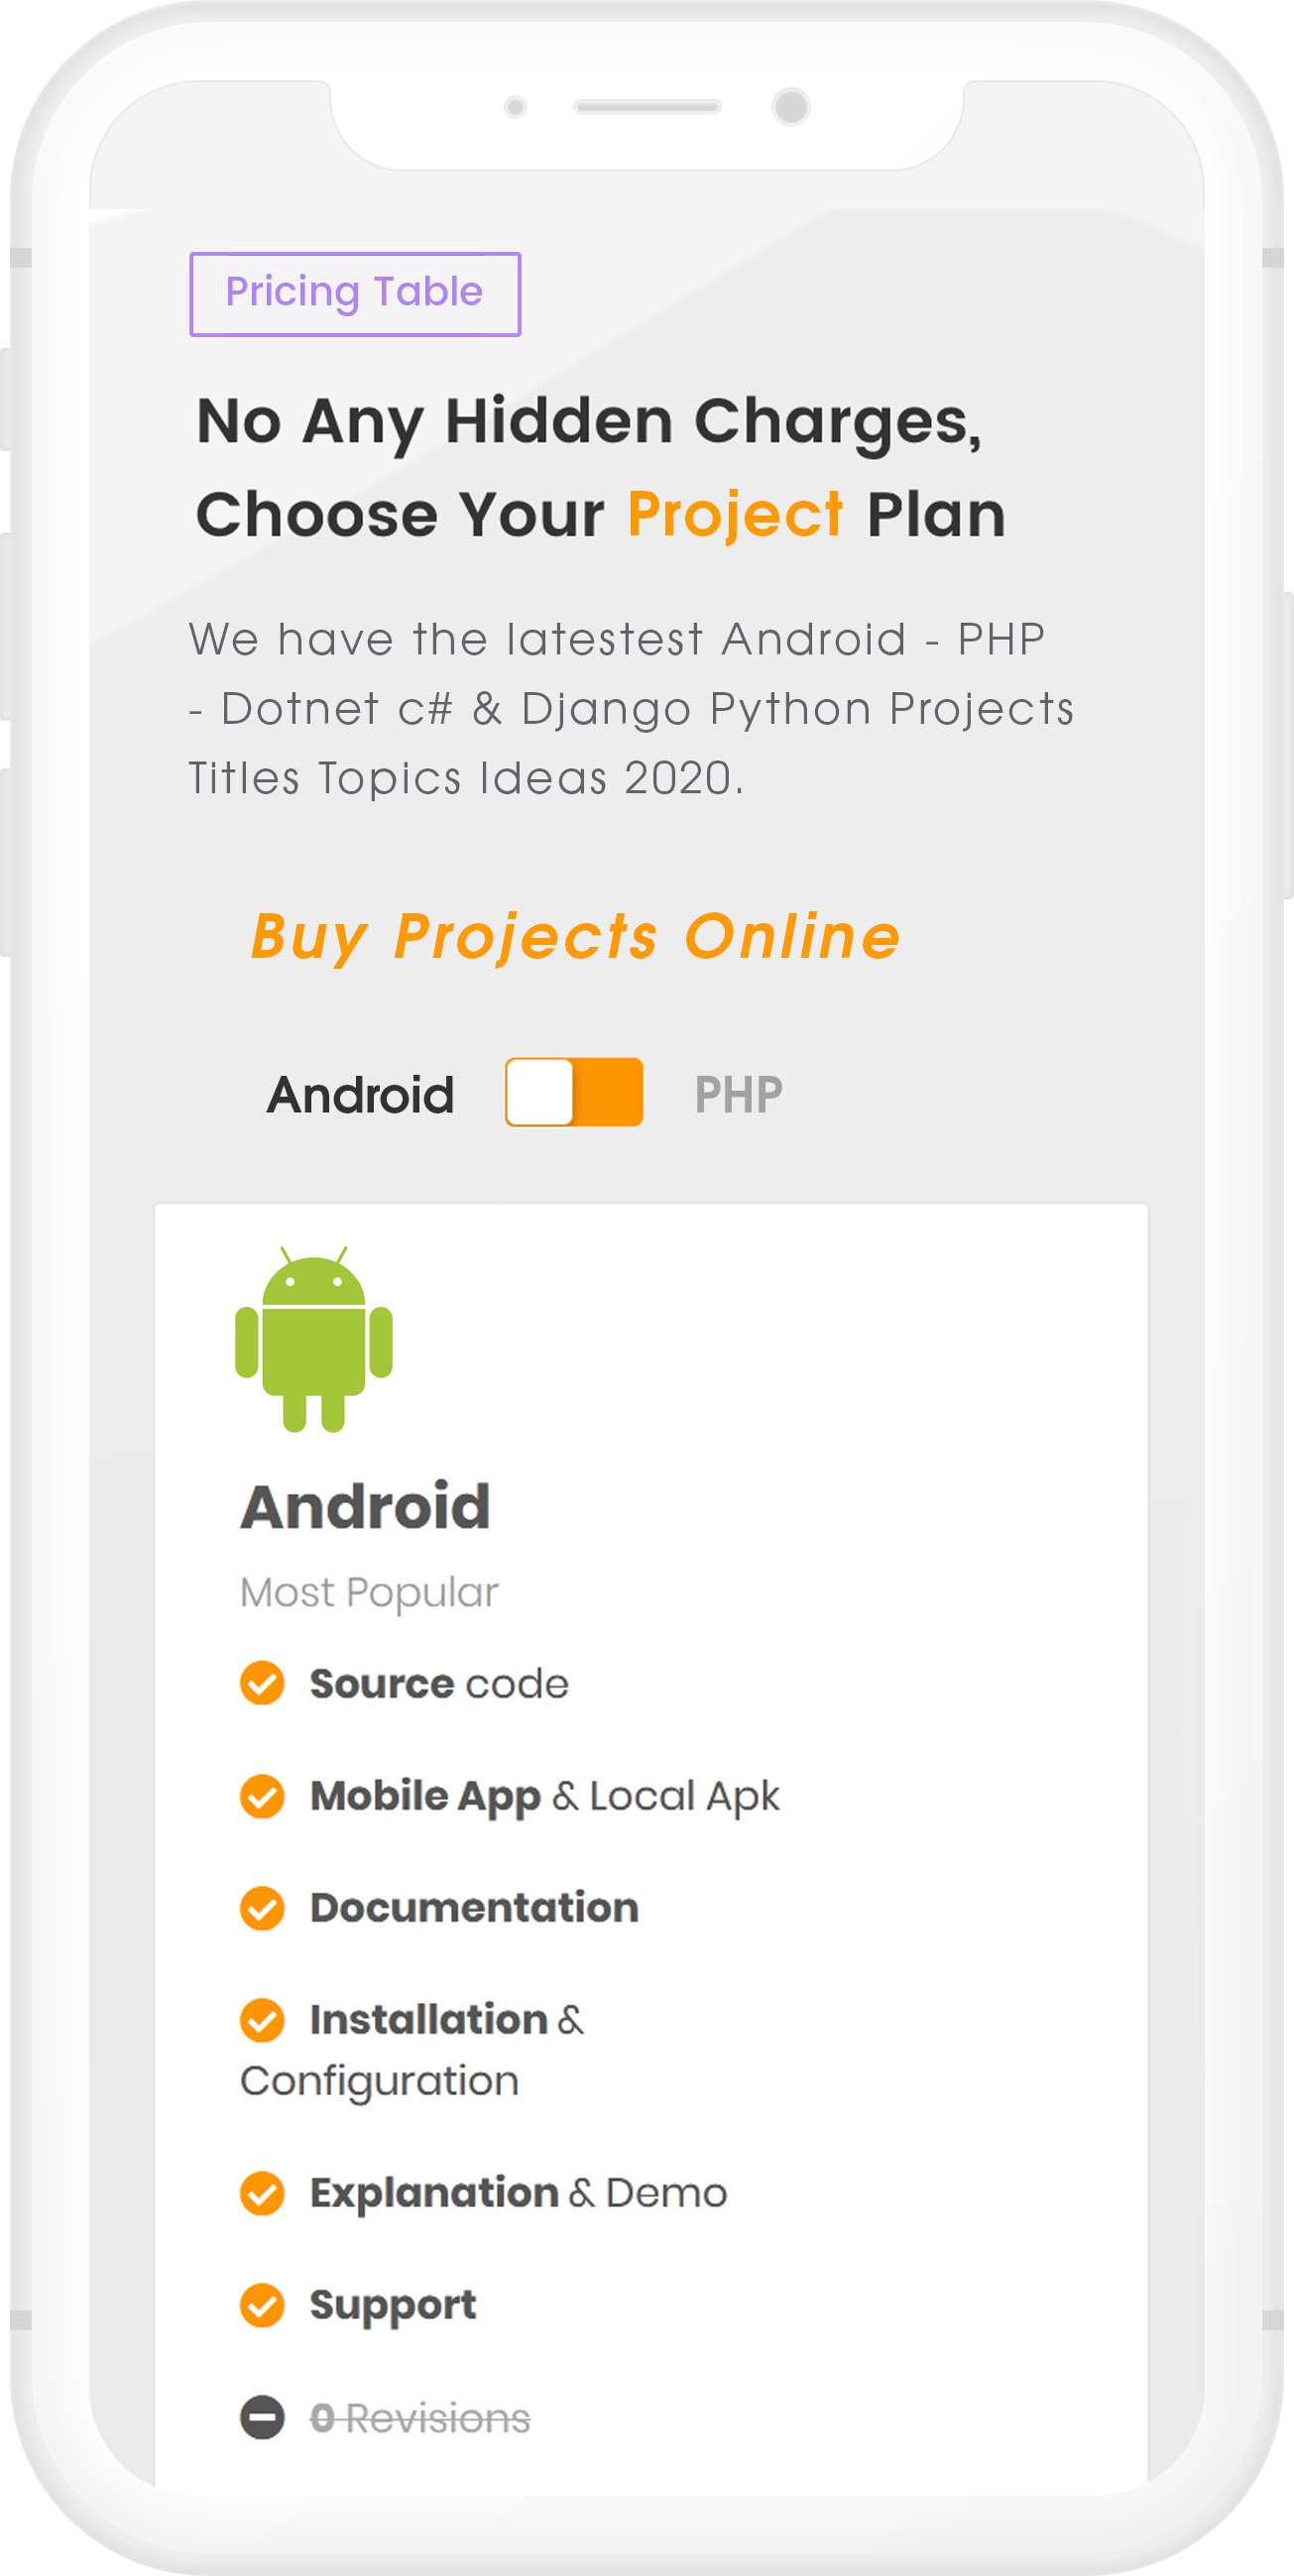 Code Shoppy - Online Shopping For Android, PHP, Dotnet ...